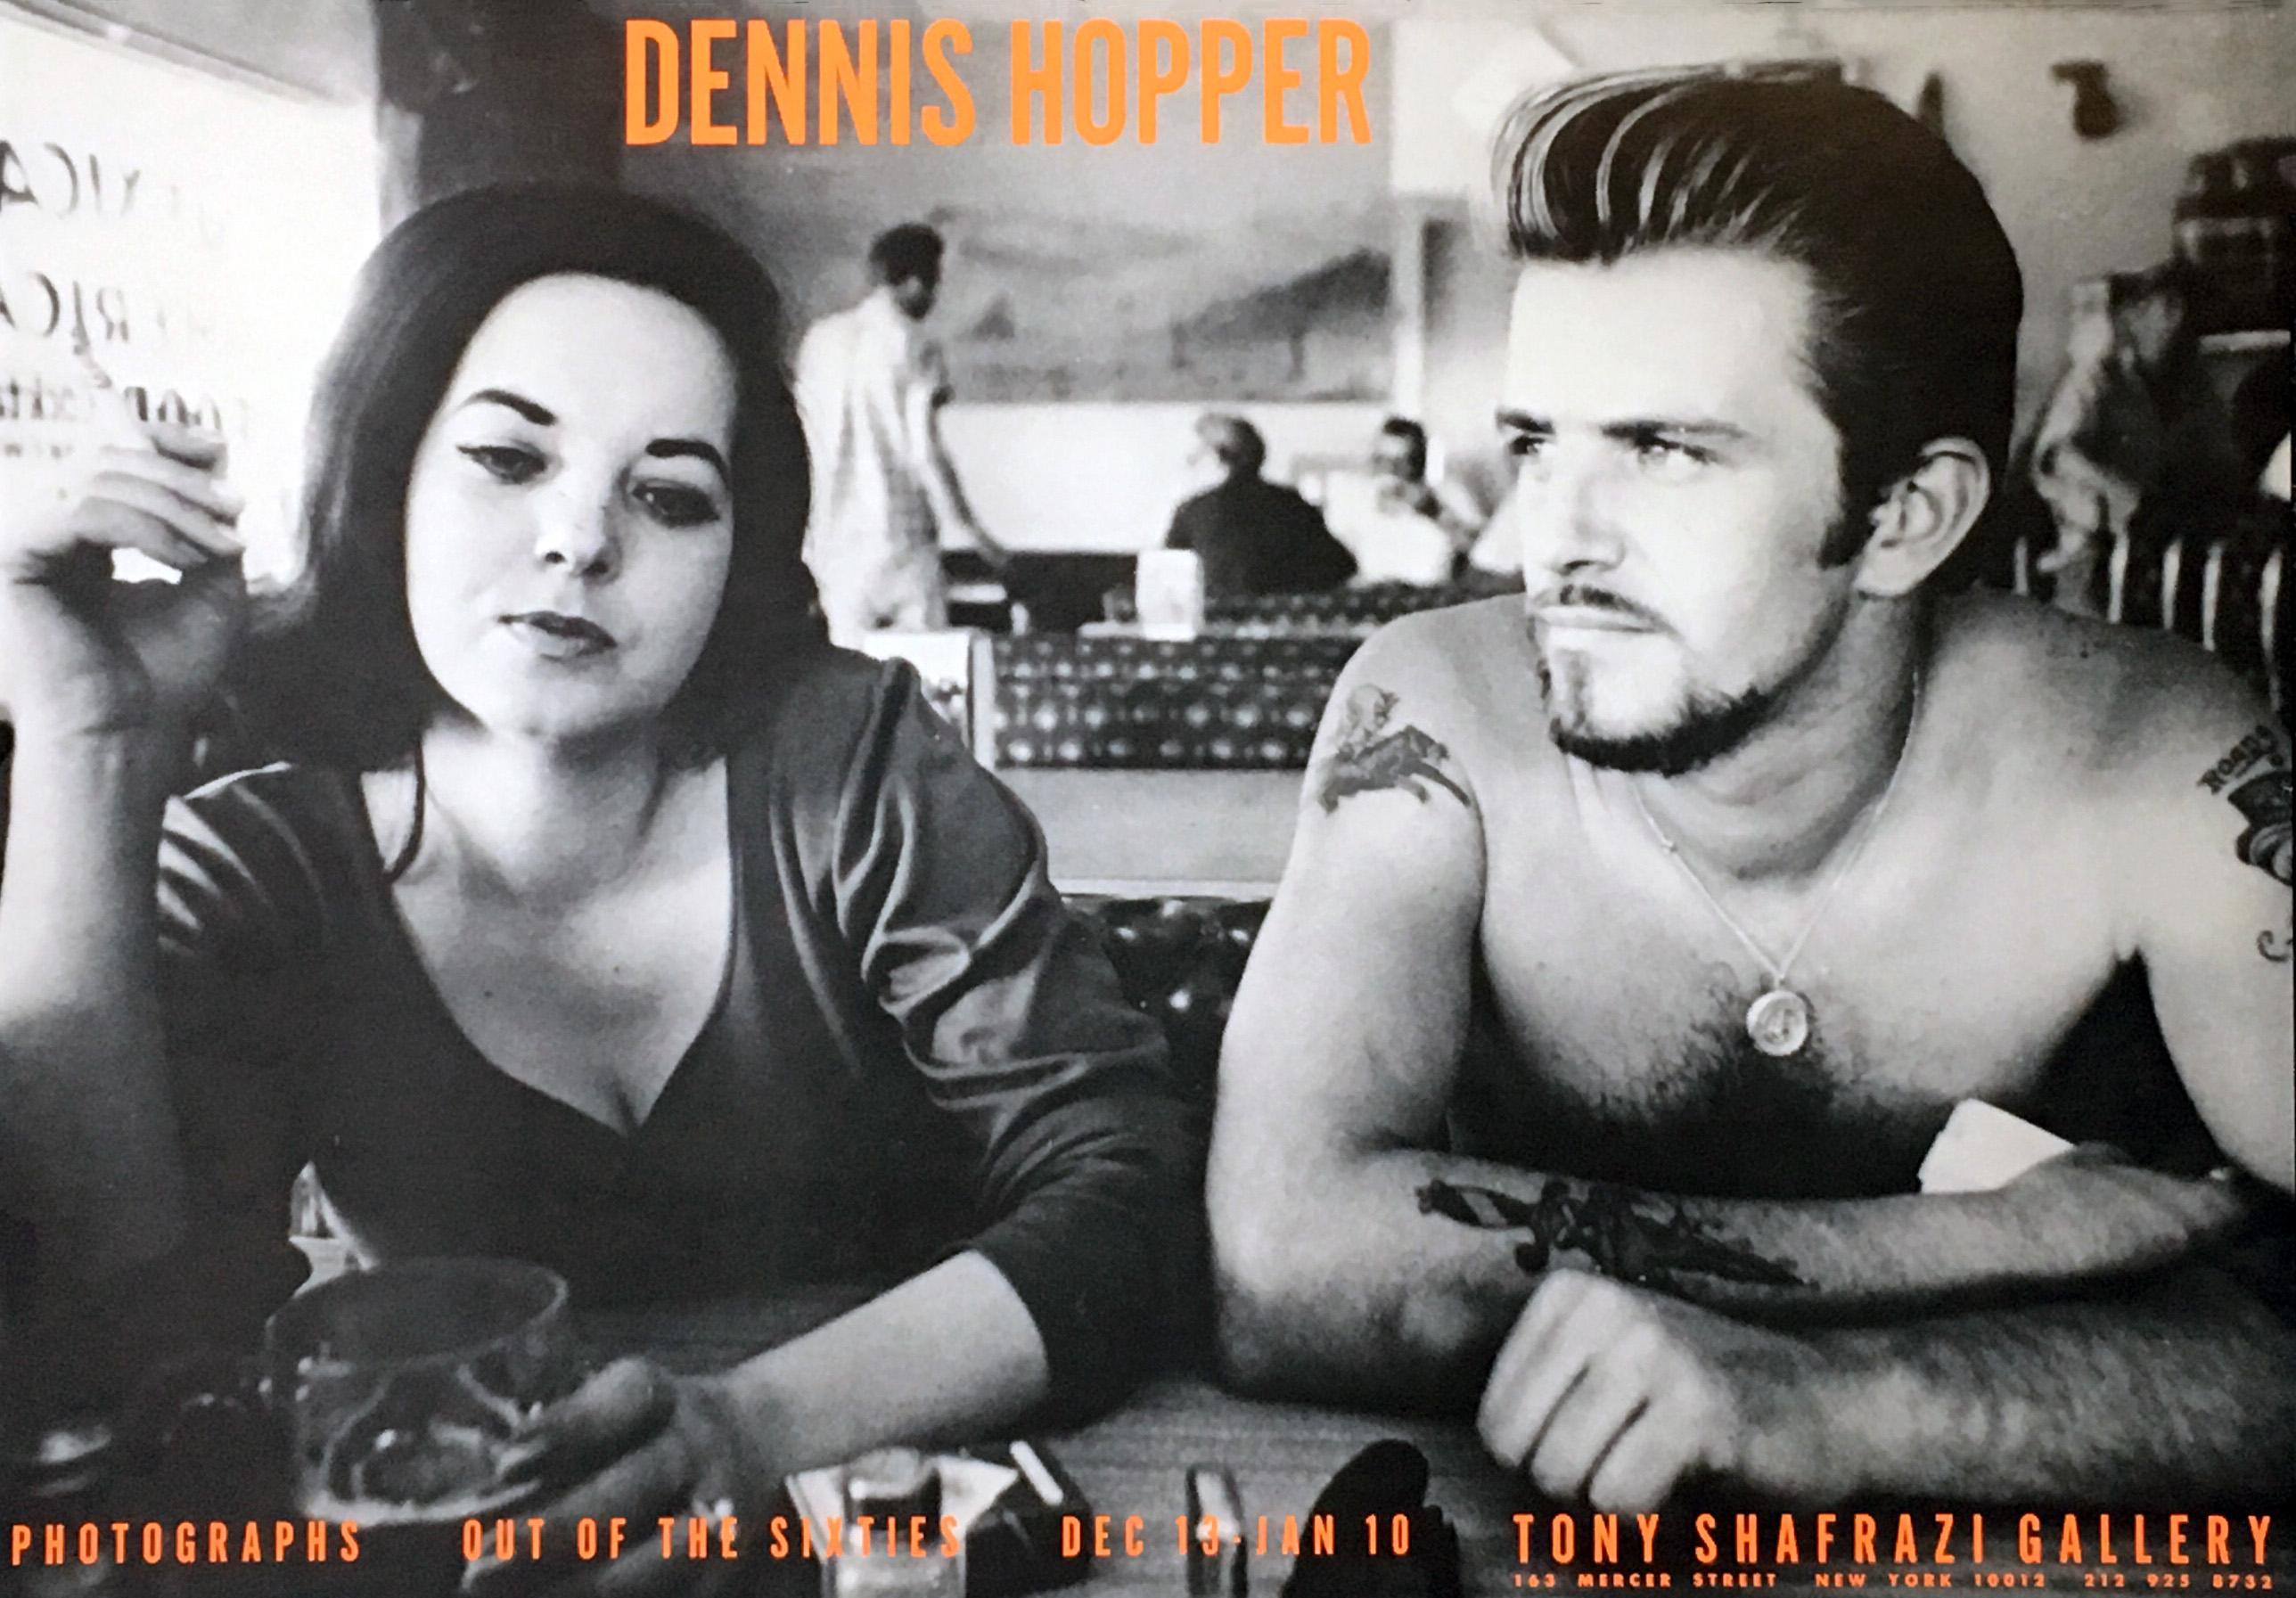 Was Dennis Hopper a painter?